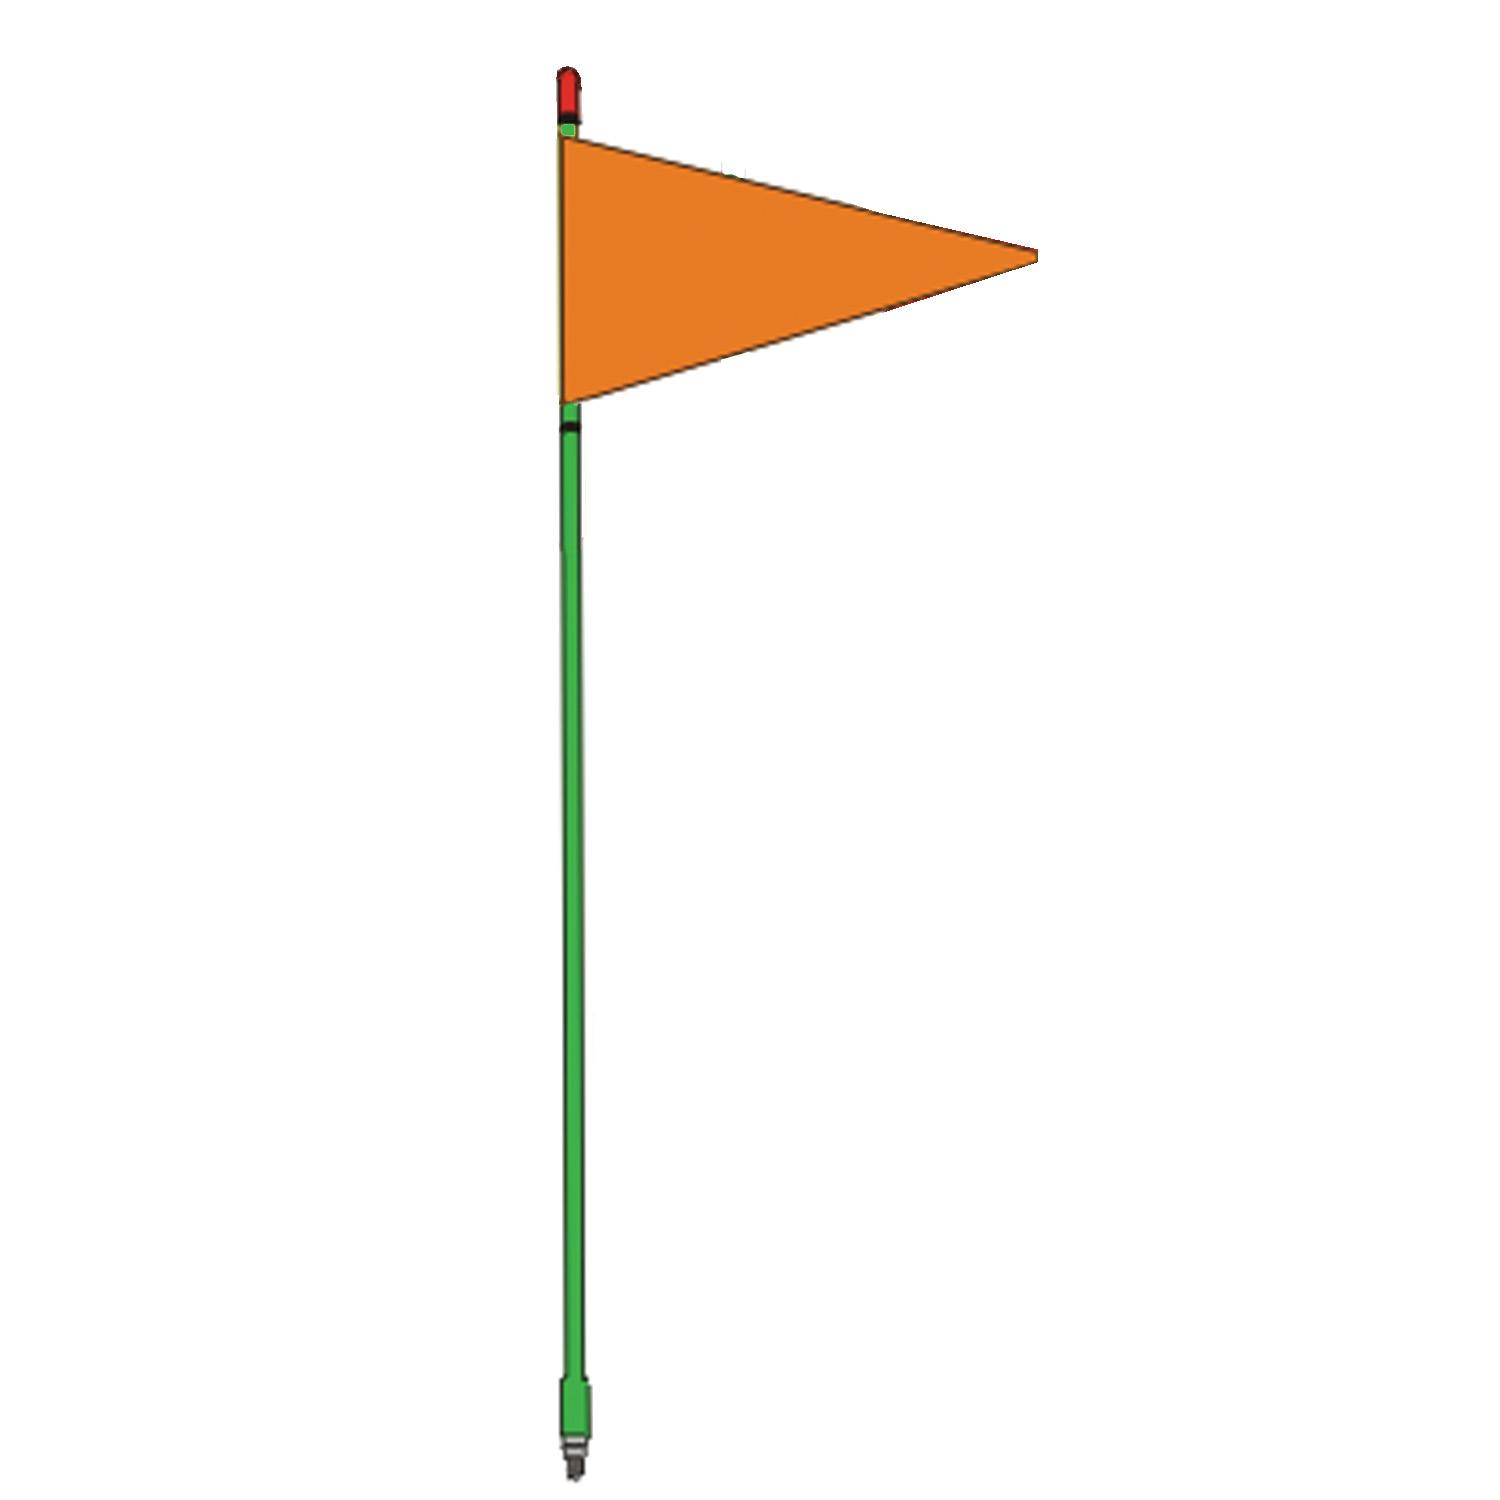 FIRESTIK - F4-G 4 FOOT GREEN FLAGSTICK WITH ORANGE TRIANGULAR SAFETY FLAG - STANDARD 3/8"-24 BASE THREADS